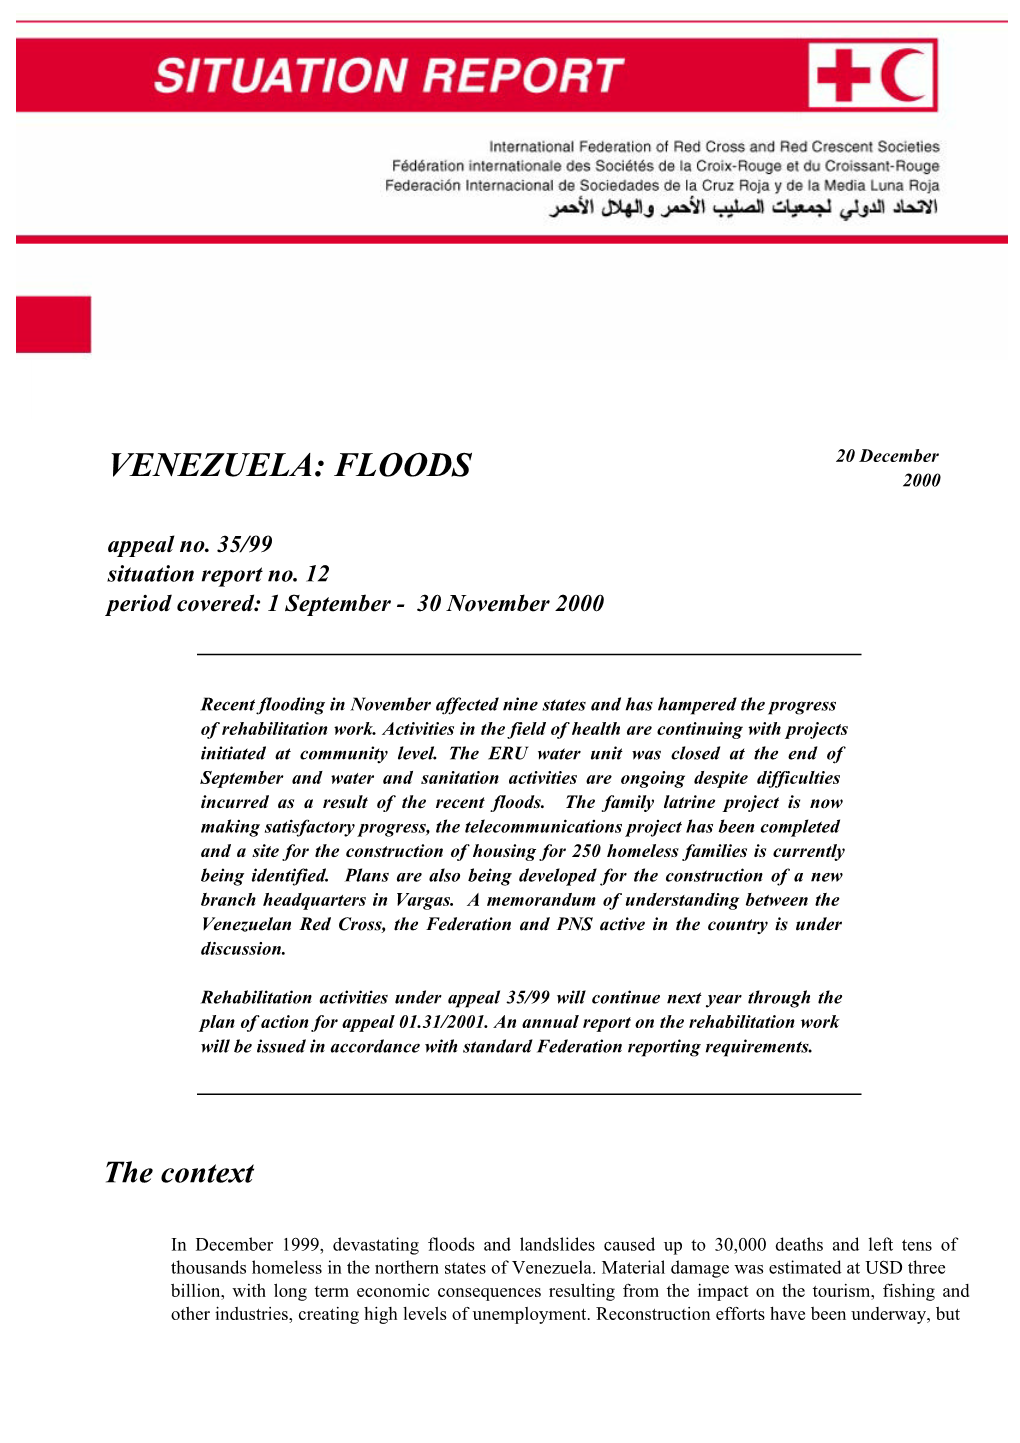 VENEZUELA FLOODS (Appeal 35/99)